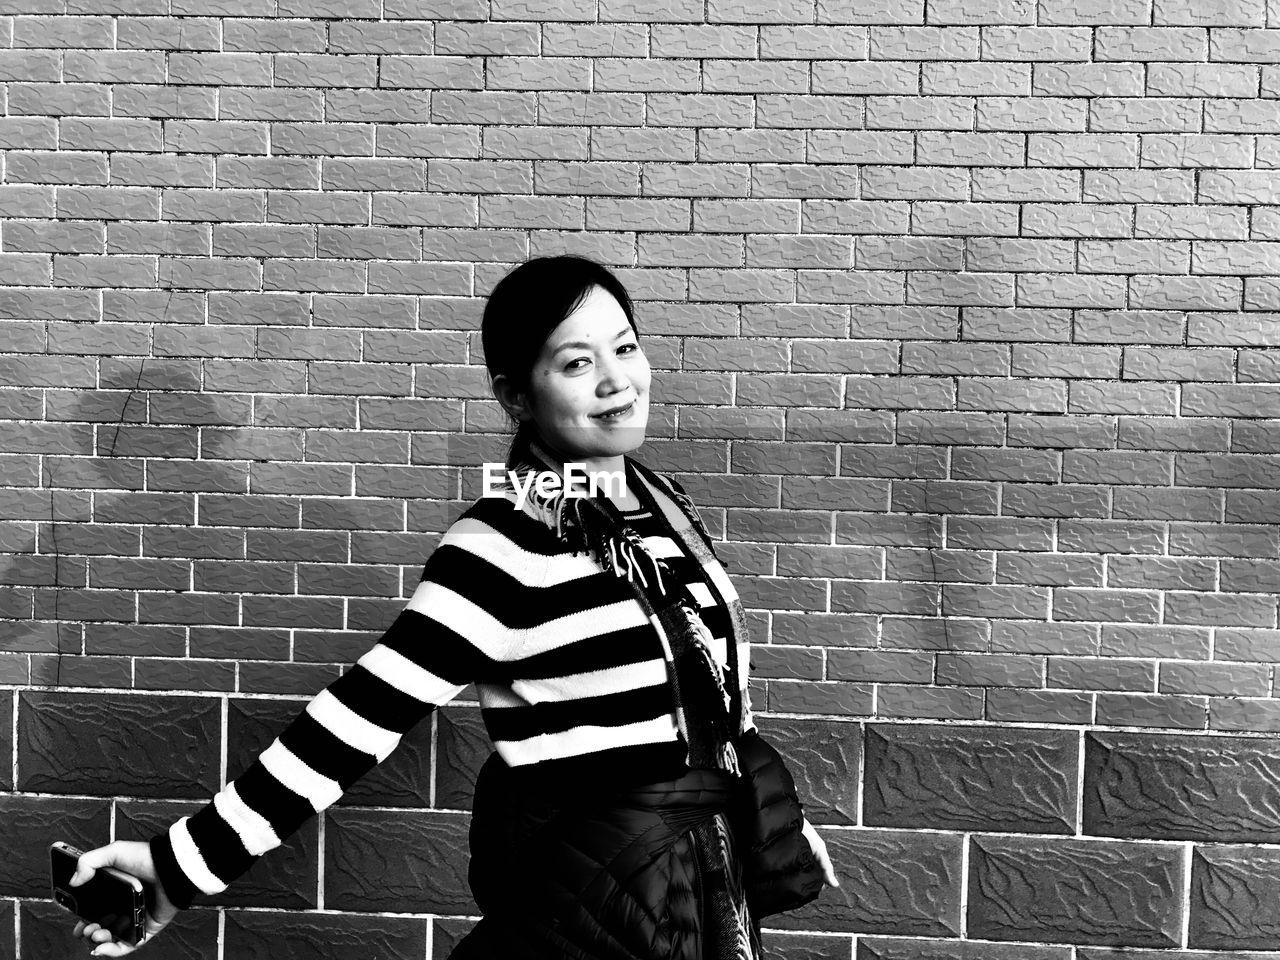 Portrait of smiling woman walking by brick walls